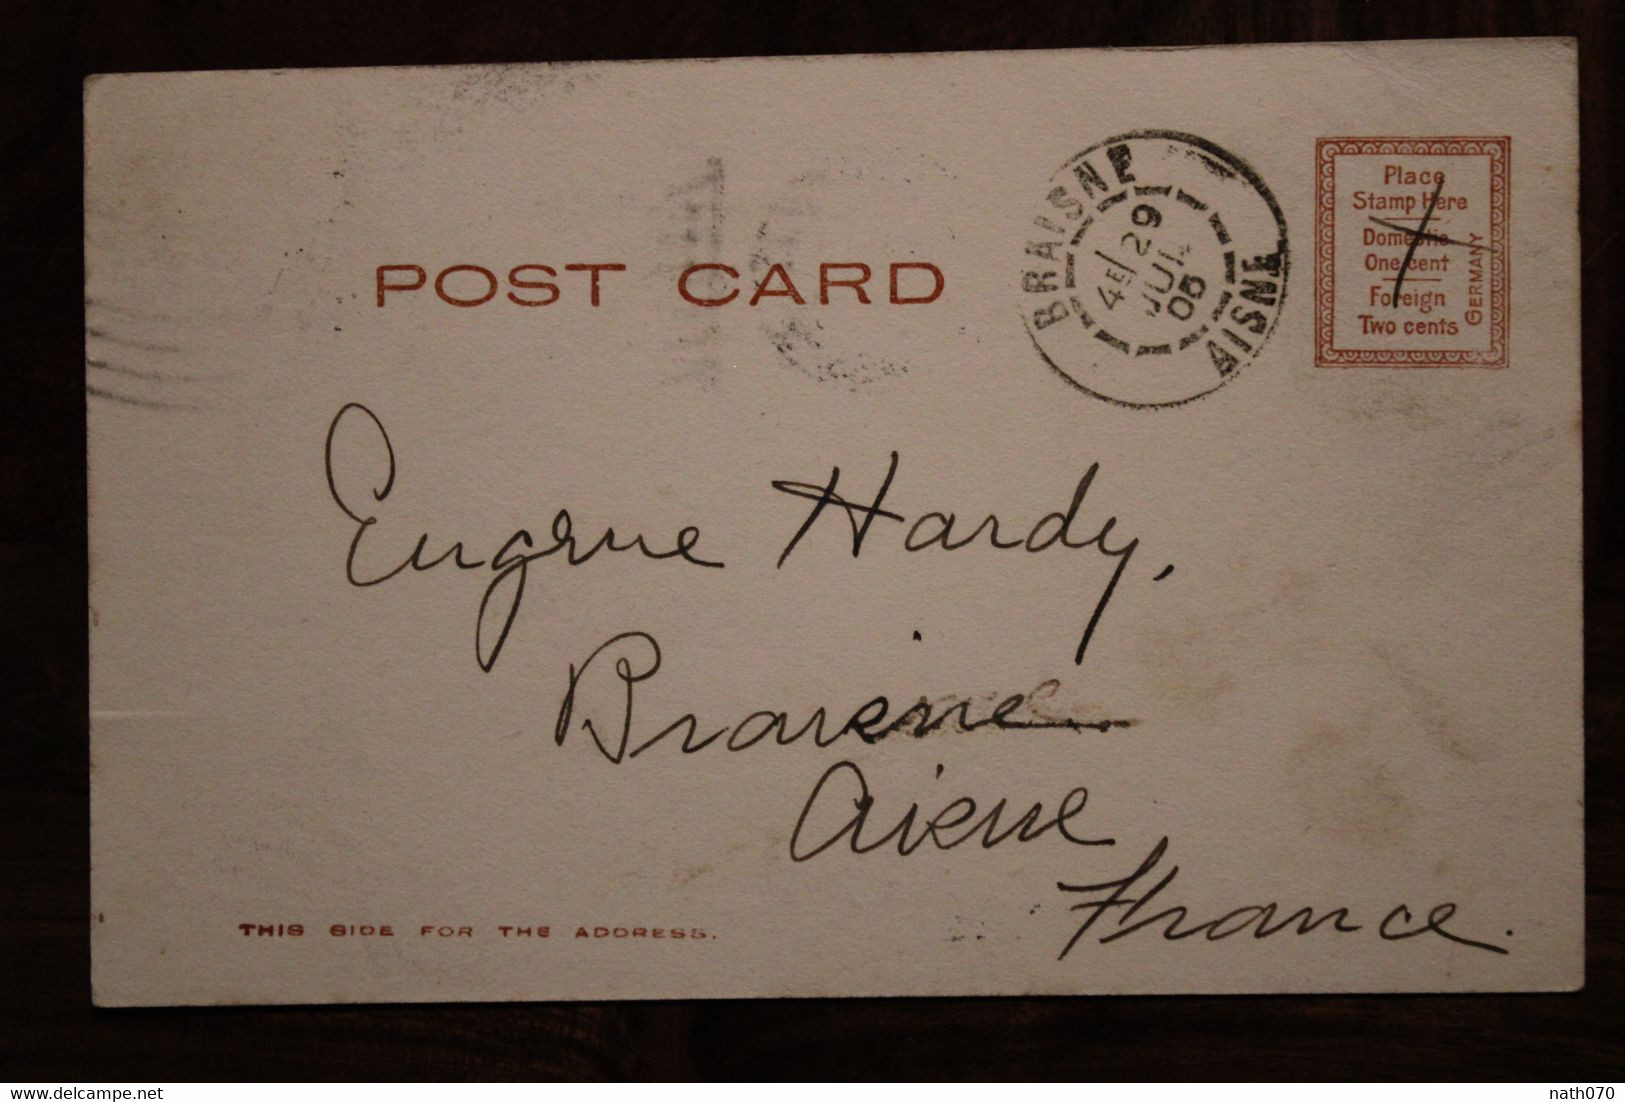 CPA Ak 1905 New Bedford NY YMCA Brockton Mass USA Us Postcard Braisne France Aisne - Covers & Documents